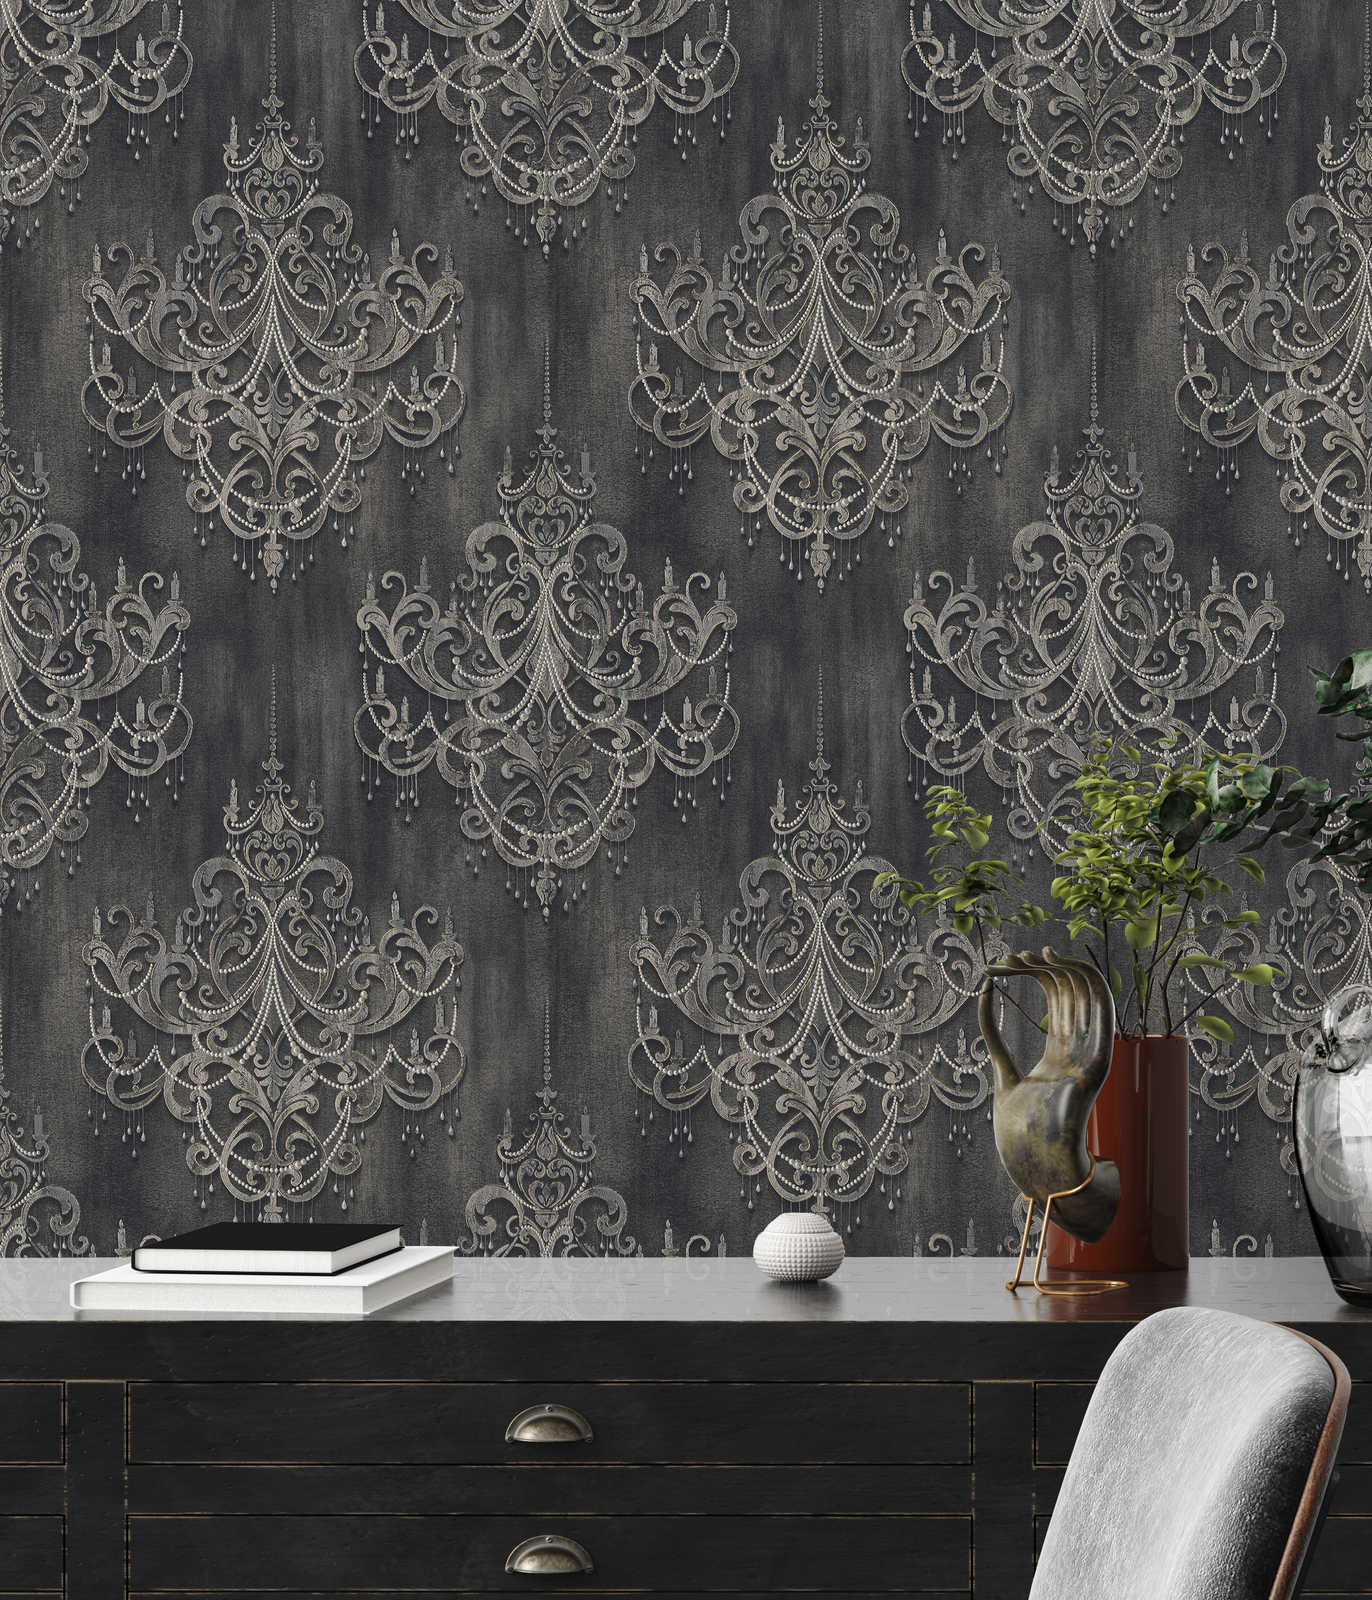             Black wallpaper beaded pattern, ornaments & metallic effect
        